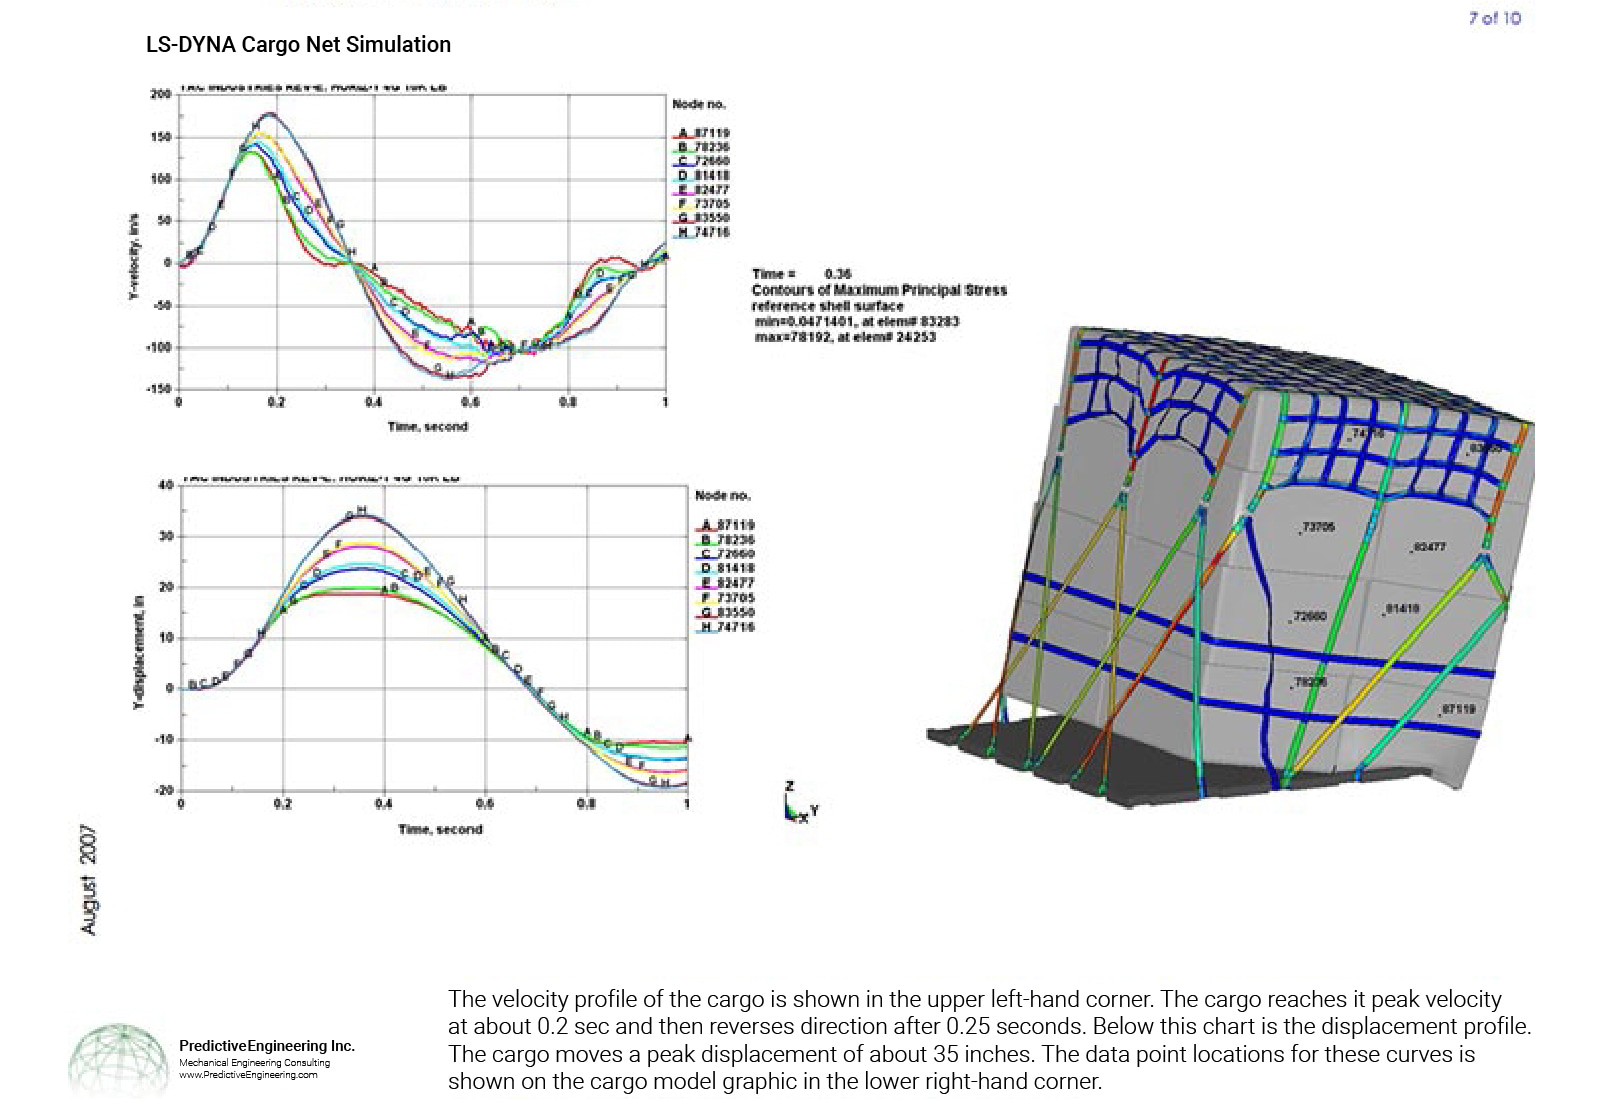 Verification of nonlinear FEA model of cargo net simulation under 9G airplane crash landing